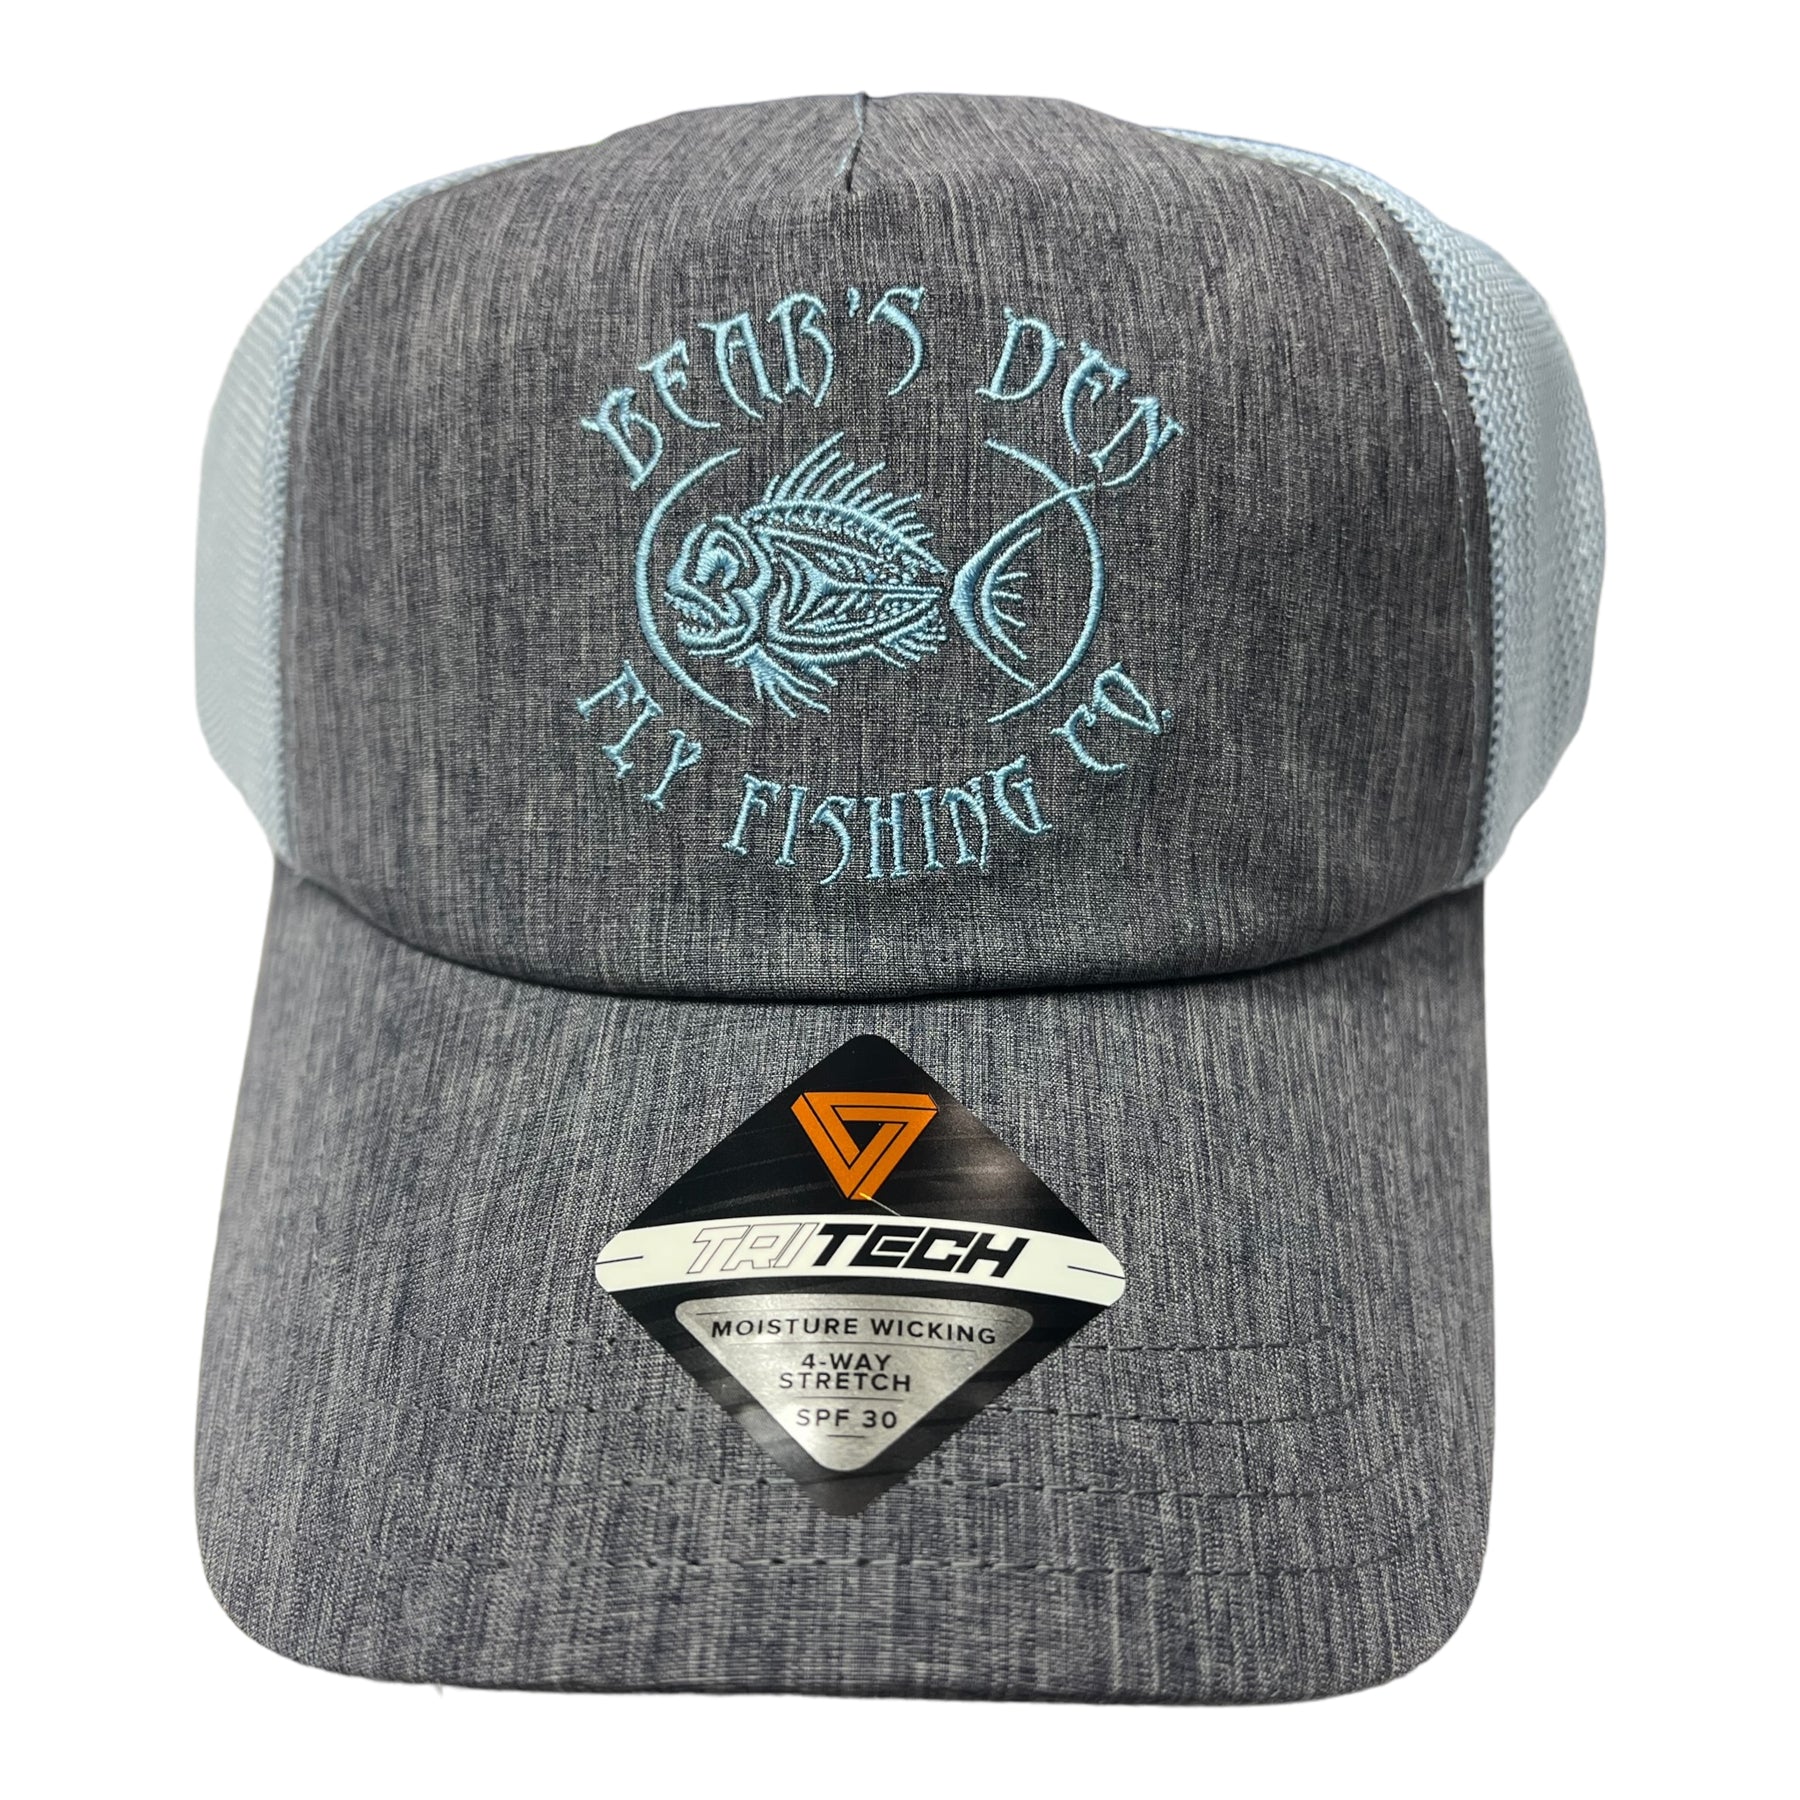 Bear's Den Signature Logo Hat – Bear's Den Fly Fishing Co.